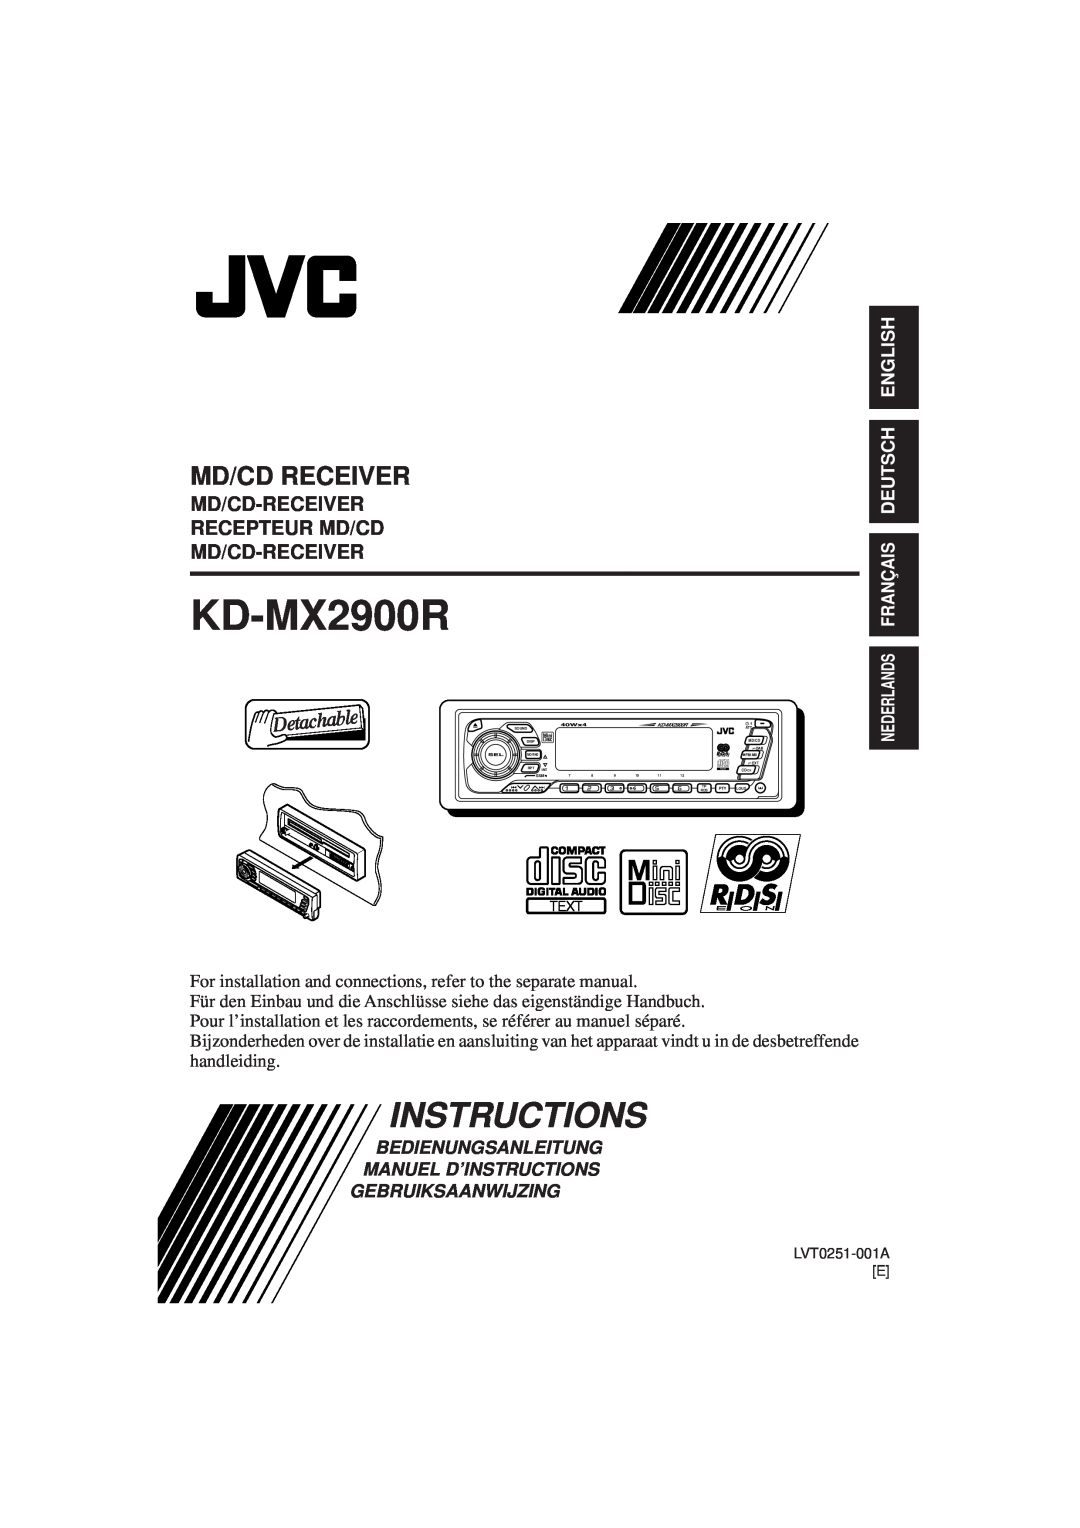 JVC KD-MX2900R manual Instructions, Md/Cd Receiver, Md/Cd-Receiver Recepteur Md/Cd Md/Cd-Receiver, Gebruiksaanwijzing 